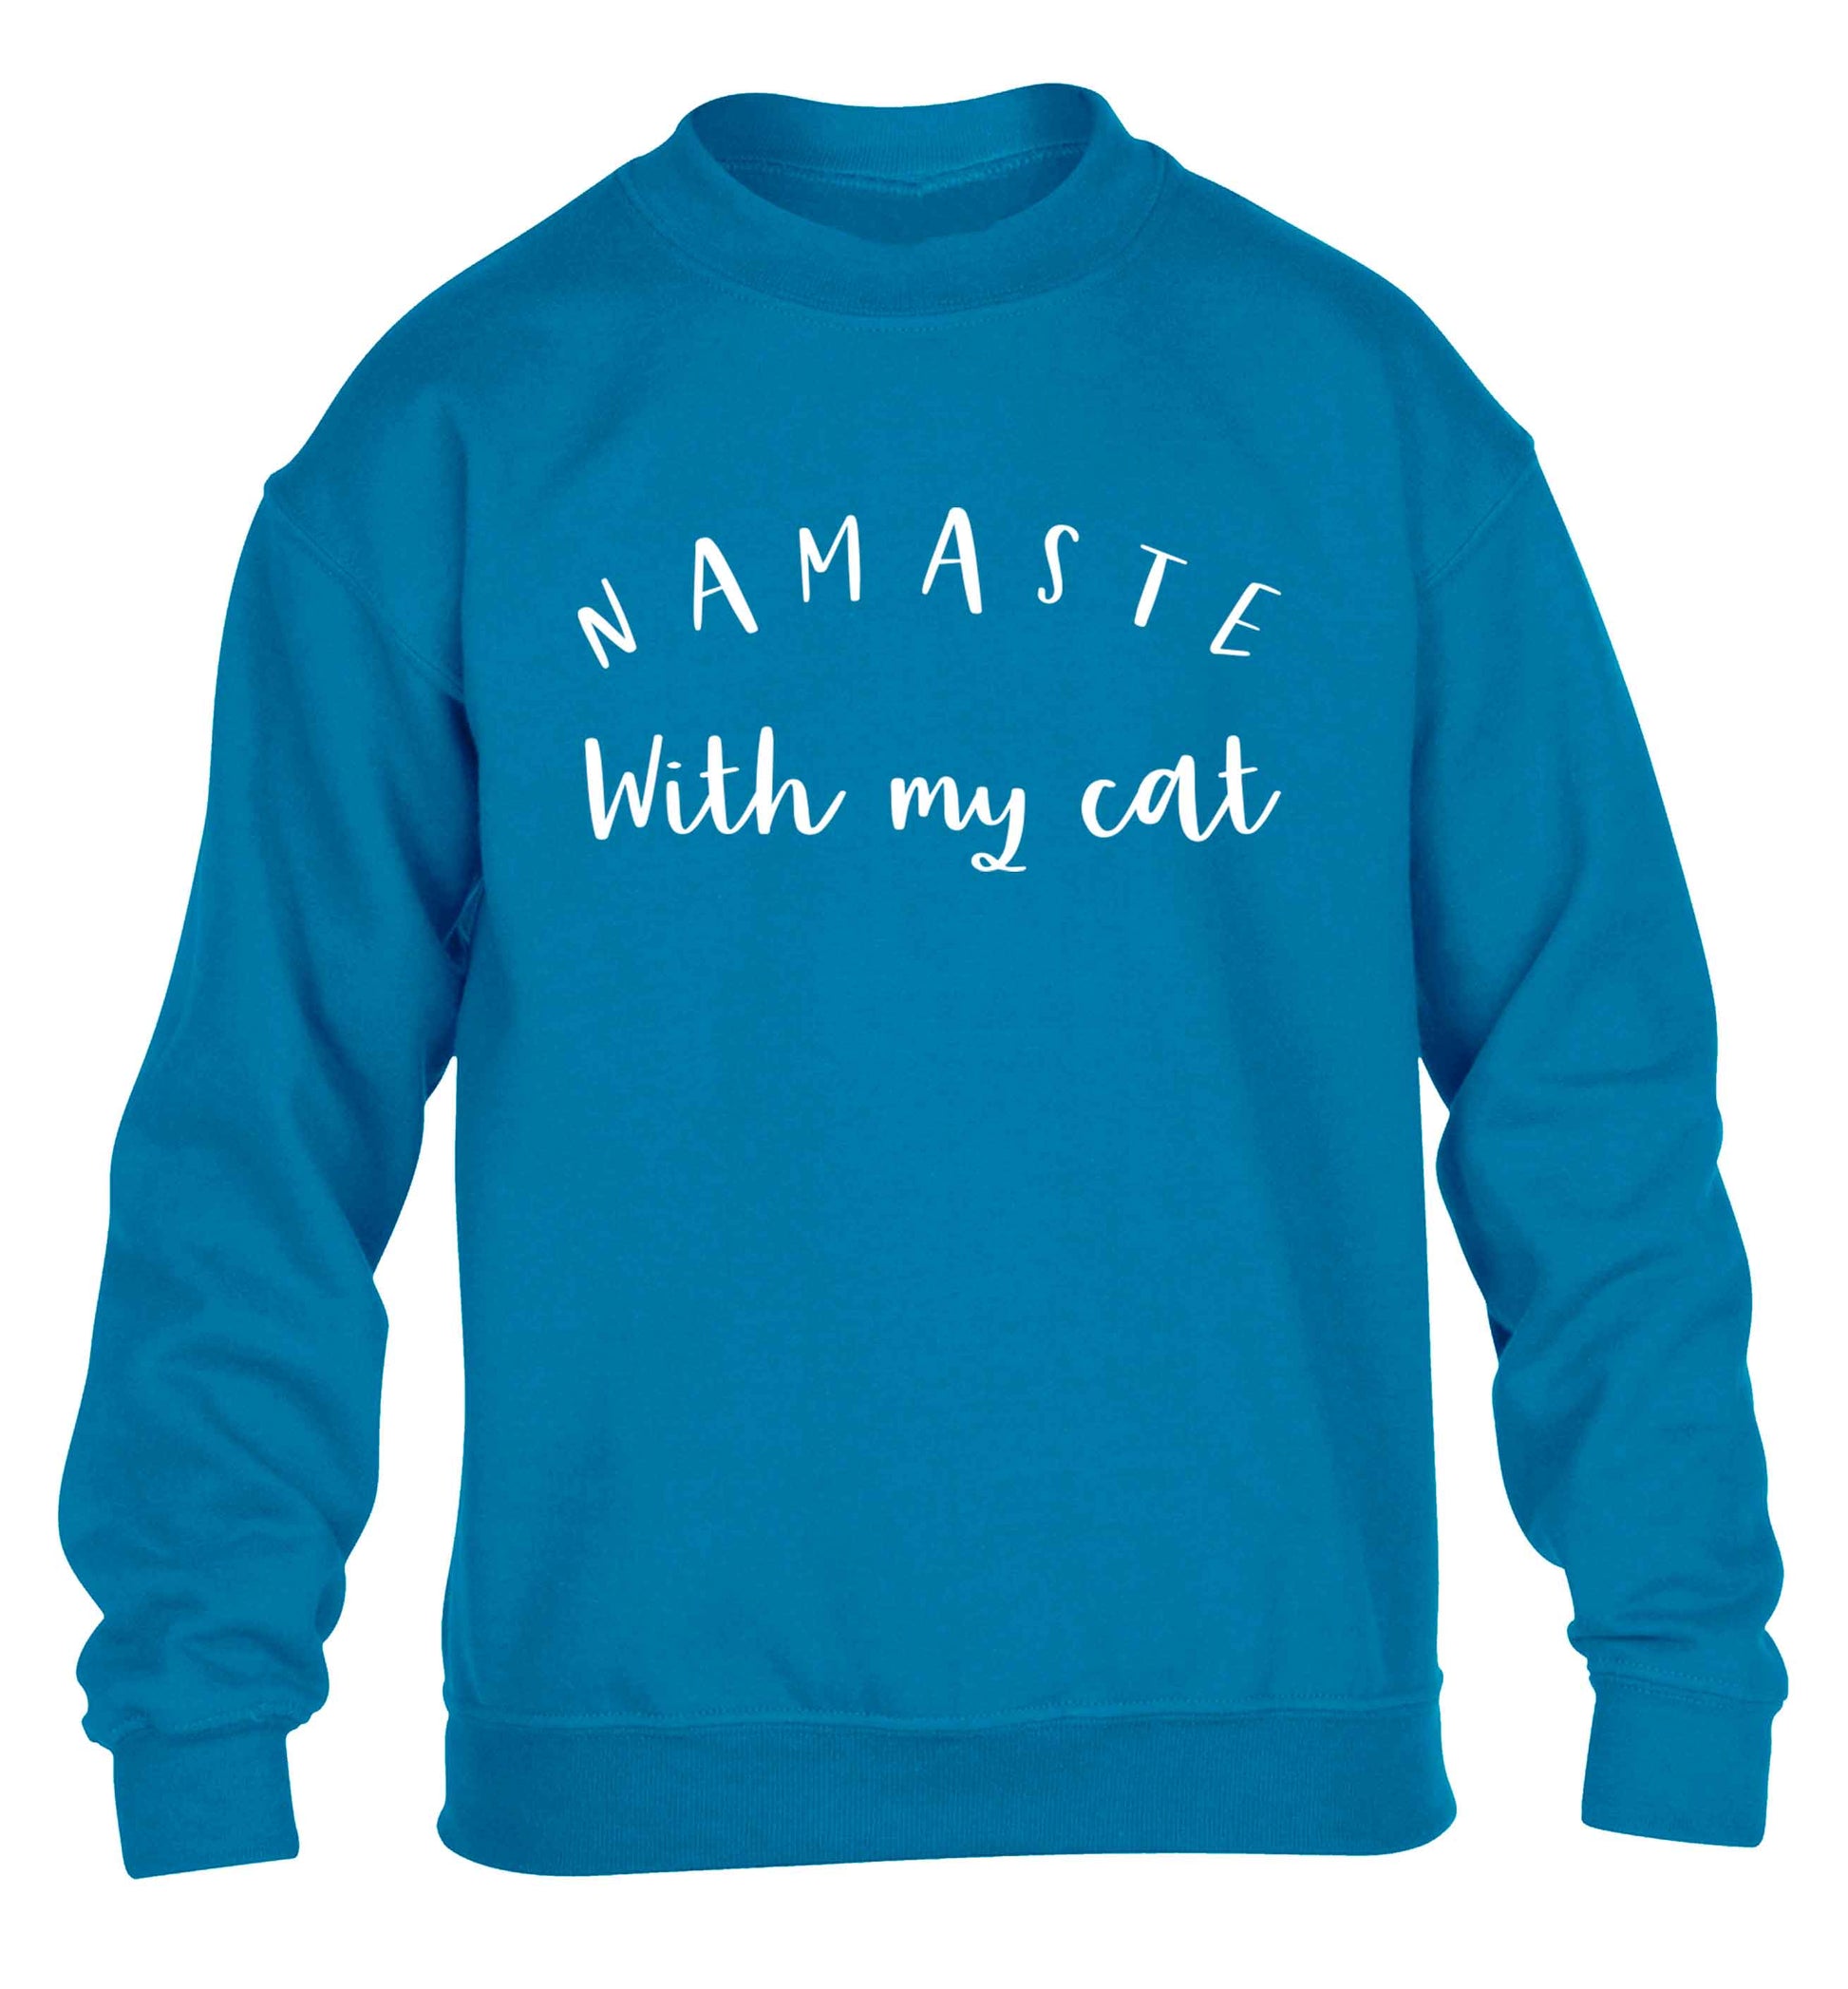 Namaste with my cat children's blue sweater 12-13 Years